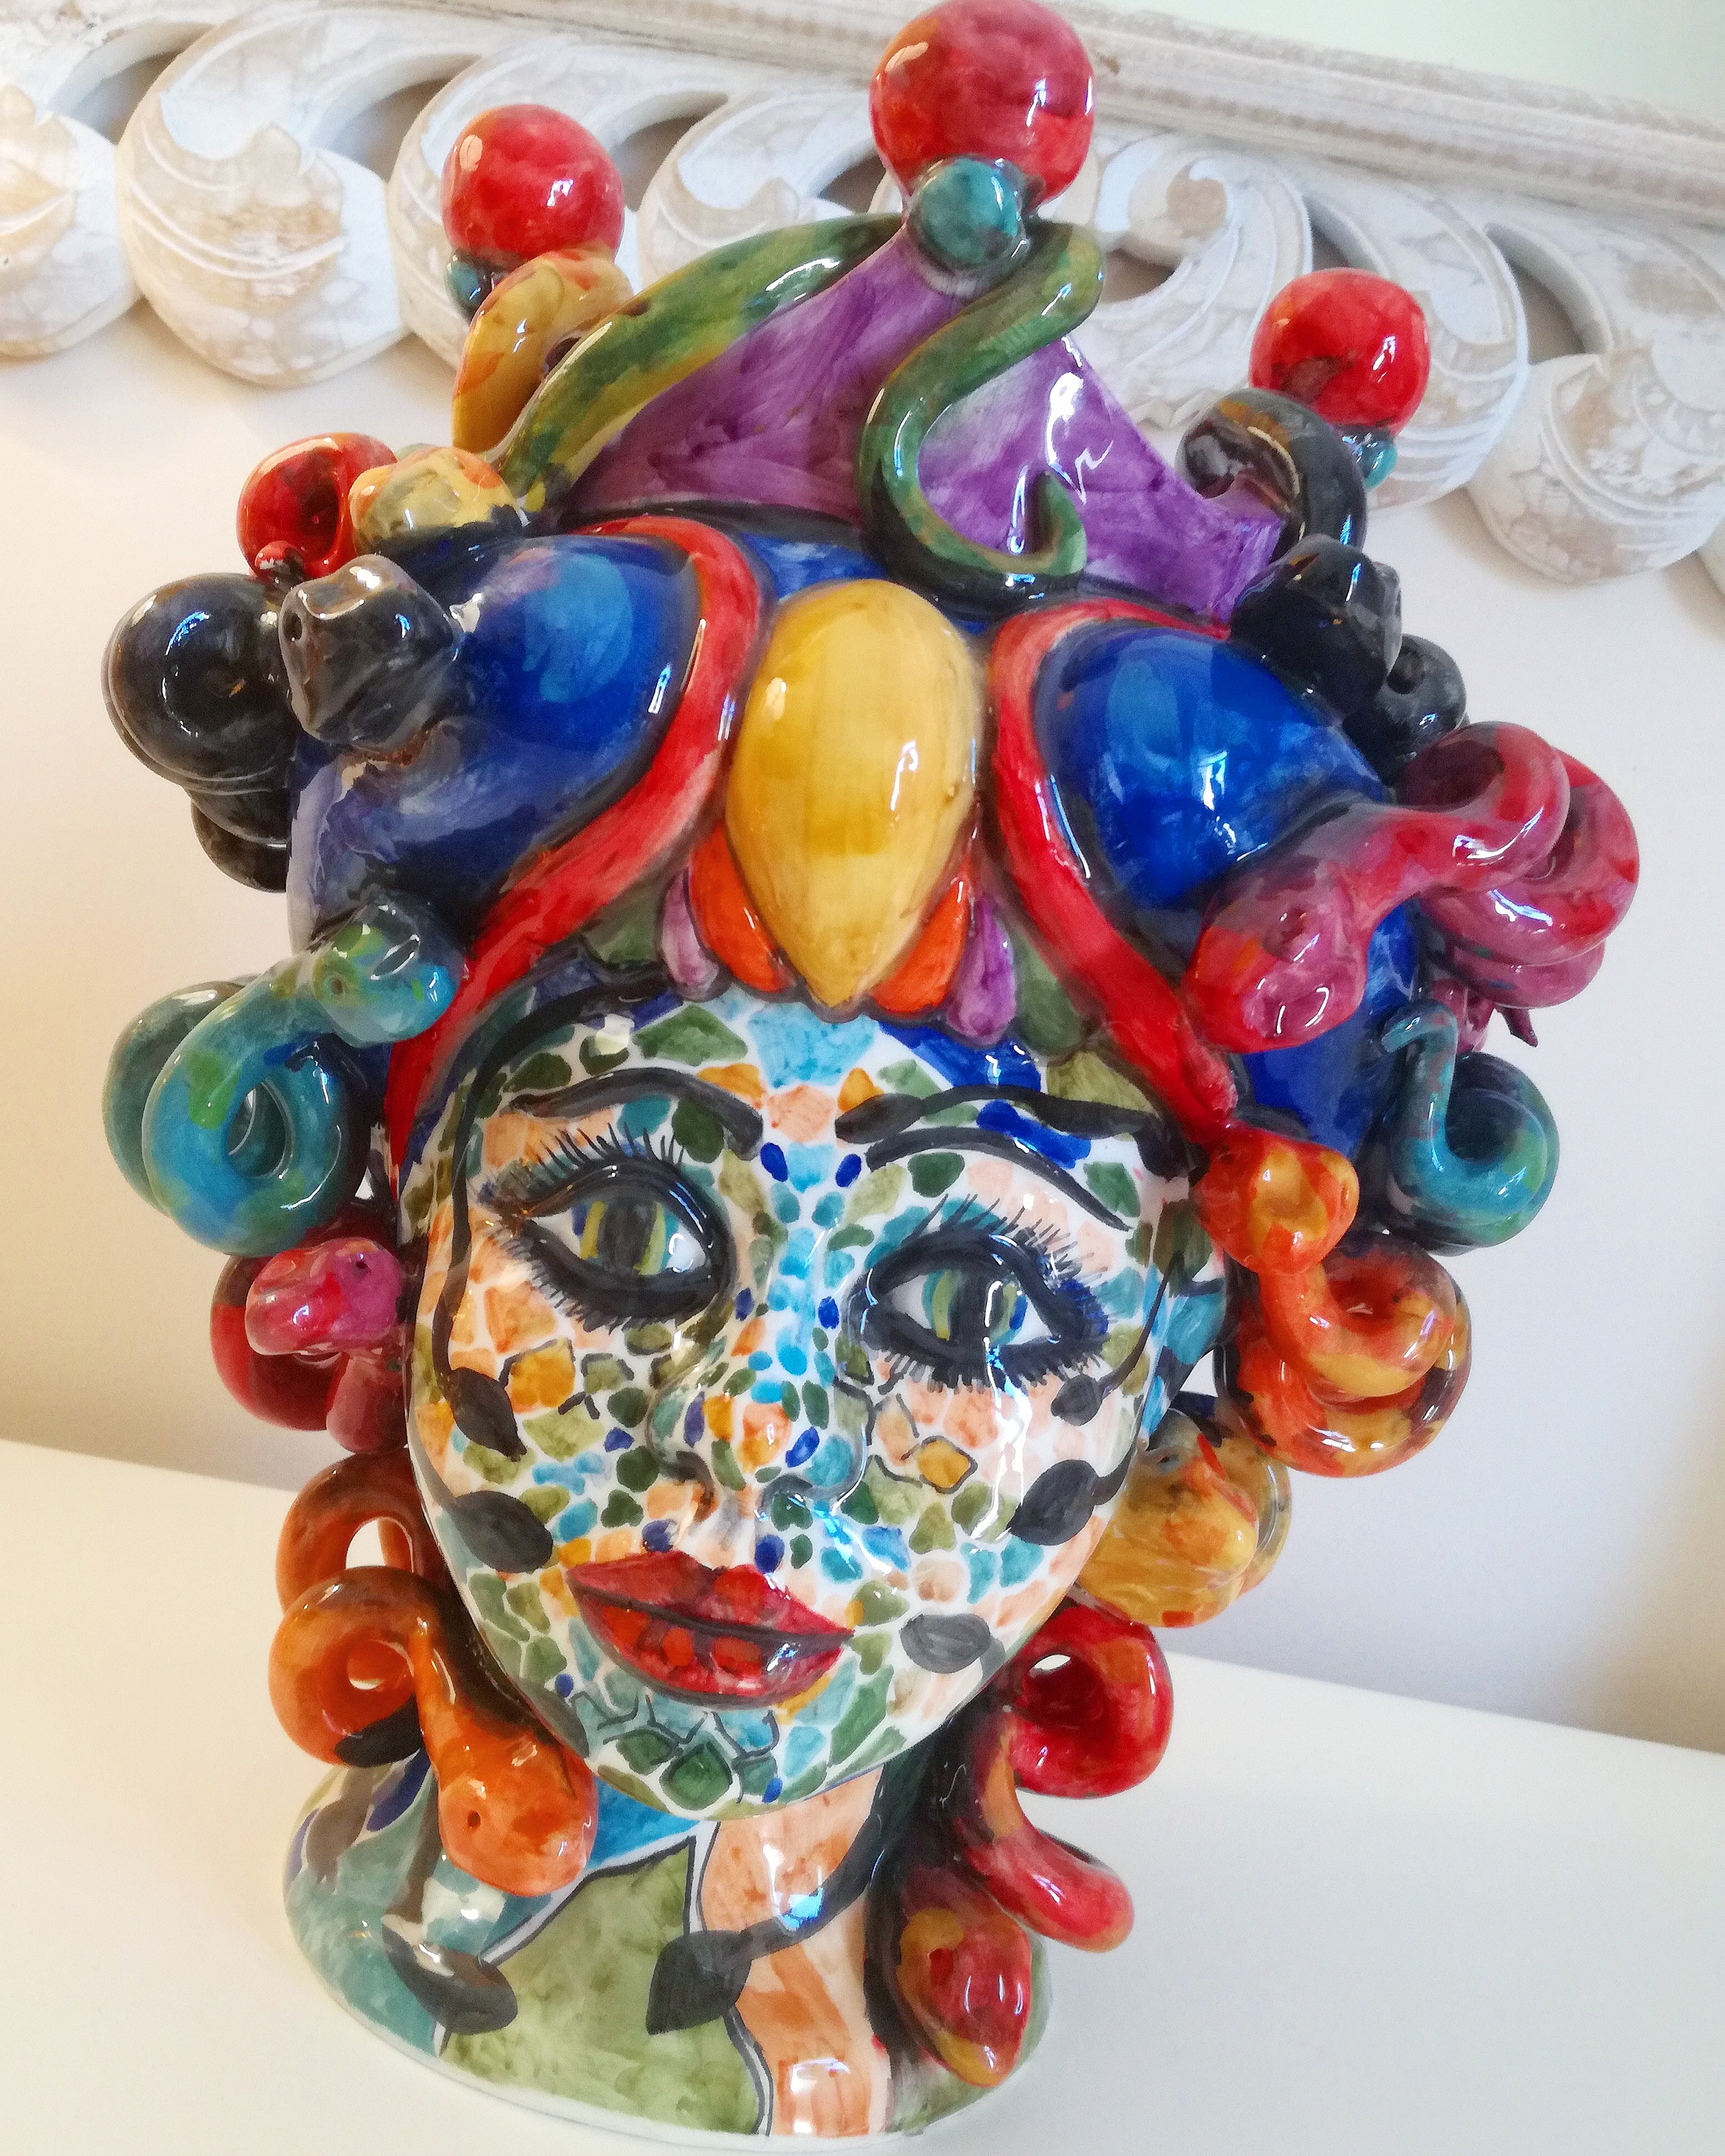 Medusa head with mosaic effect face